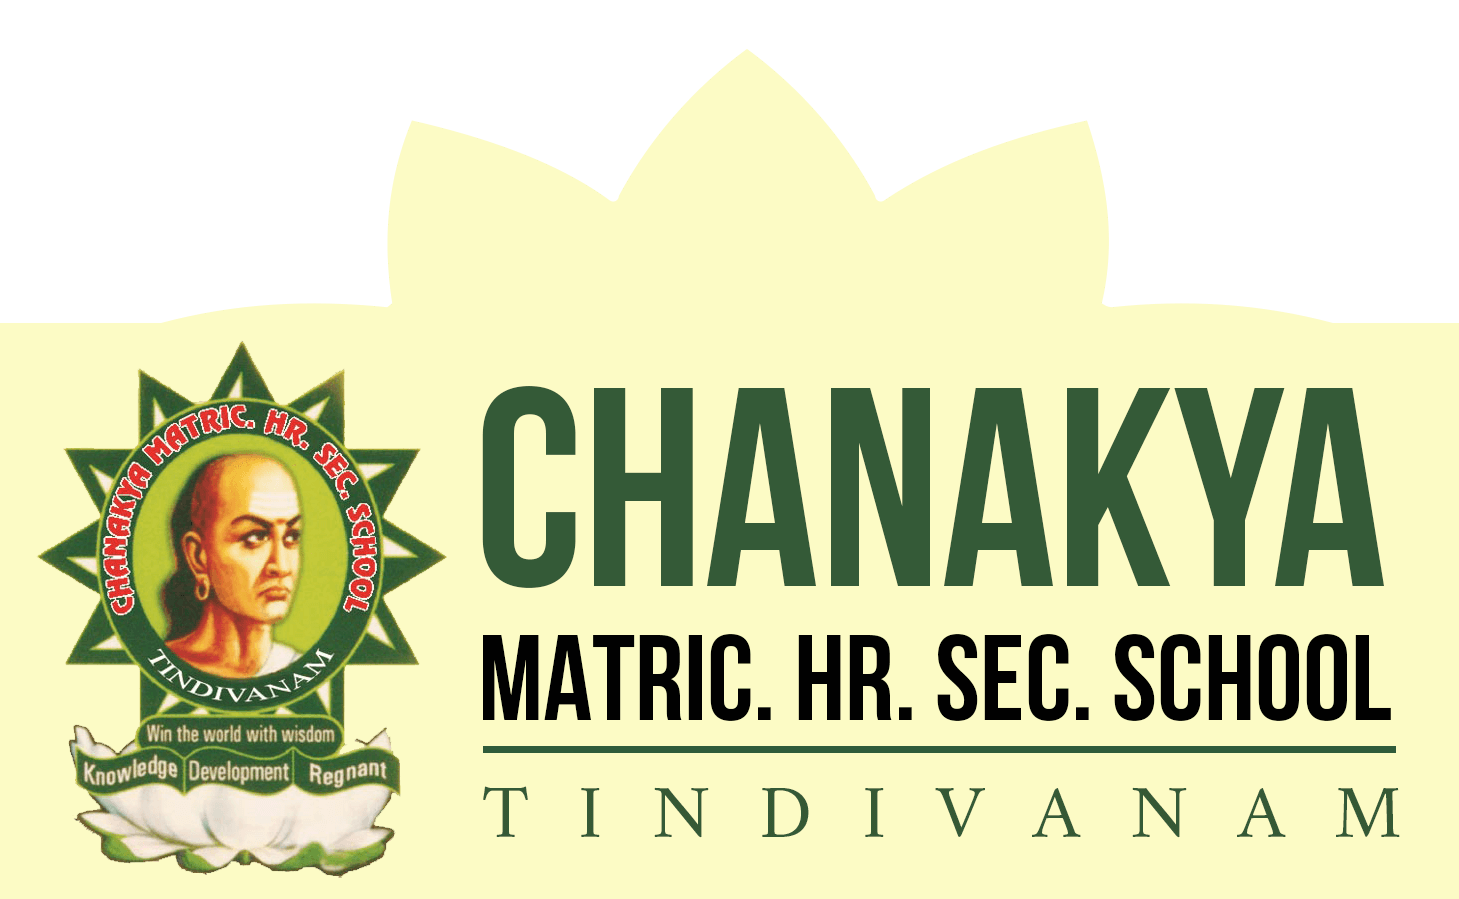 Chanakya Consultancy Services in Devendra Nagar,Raipur-chhattisgarh - Best  Mutual Fund Agents in Raipur-chhattisgarh - Justdial